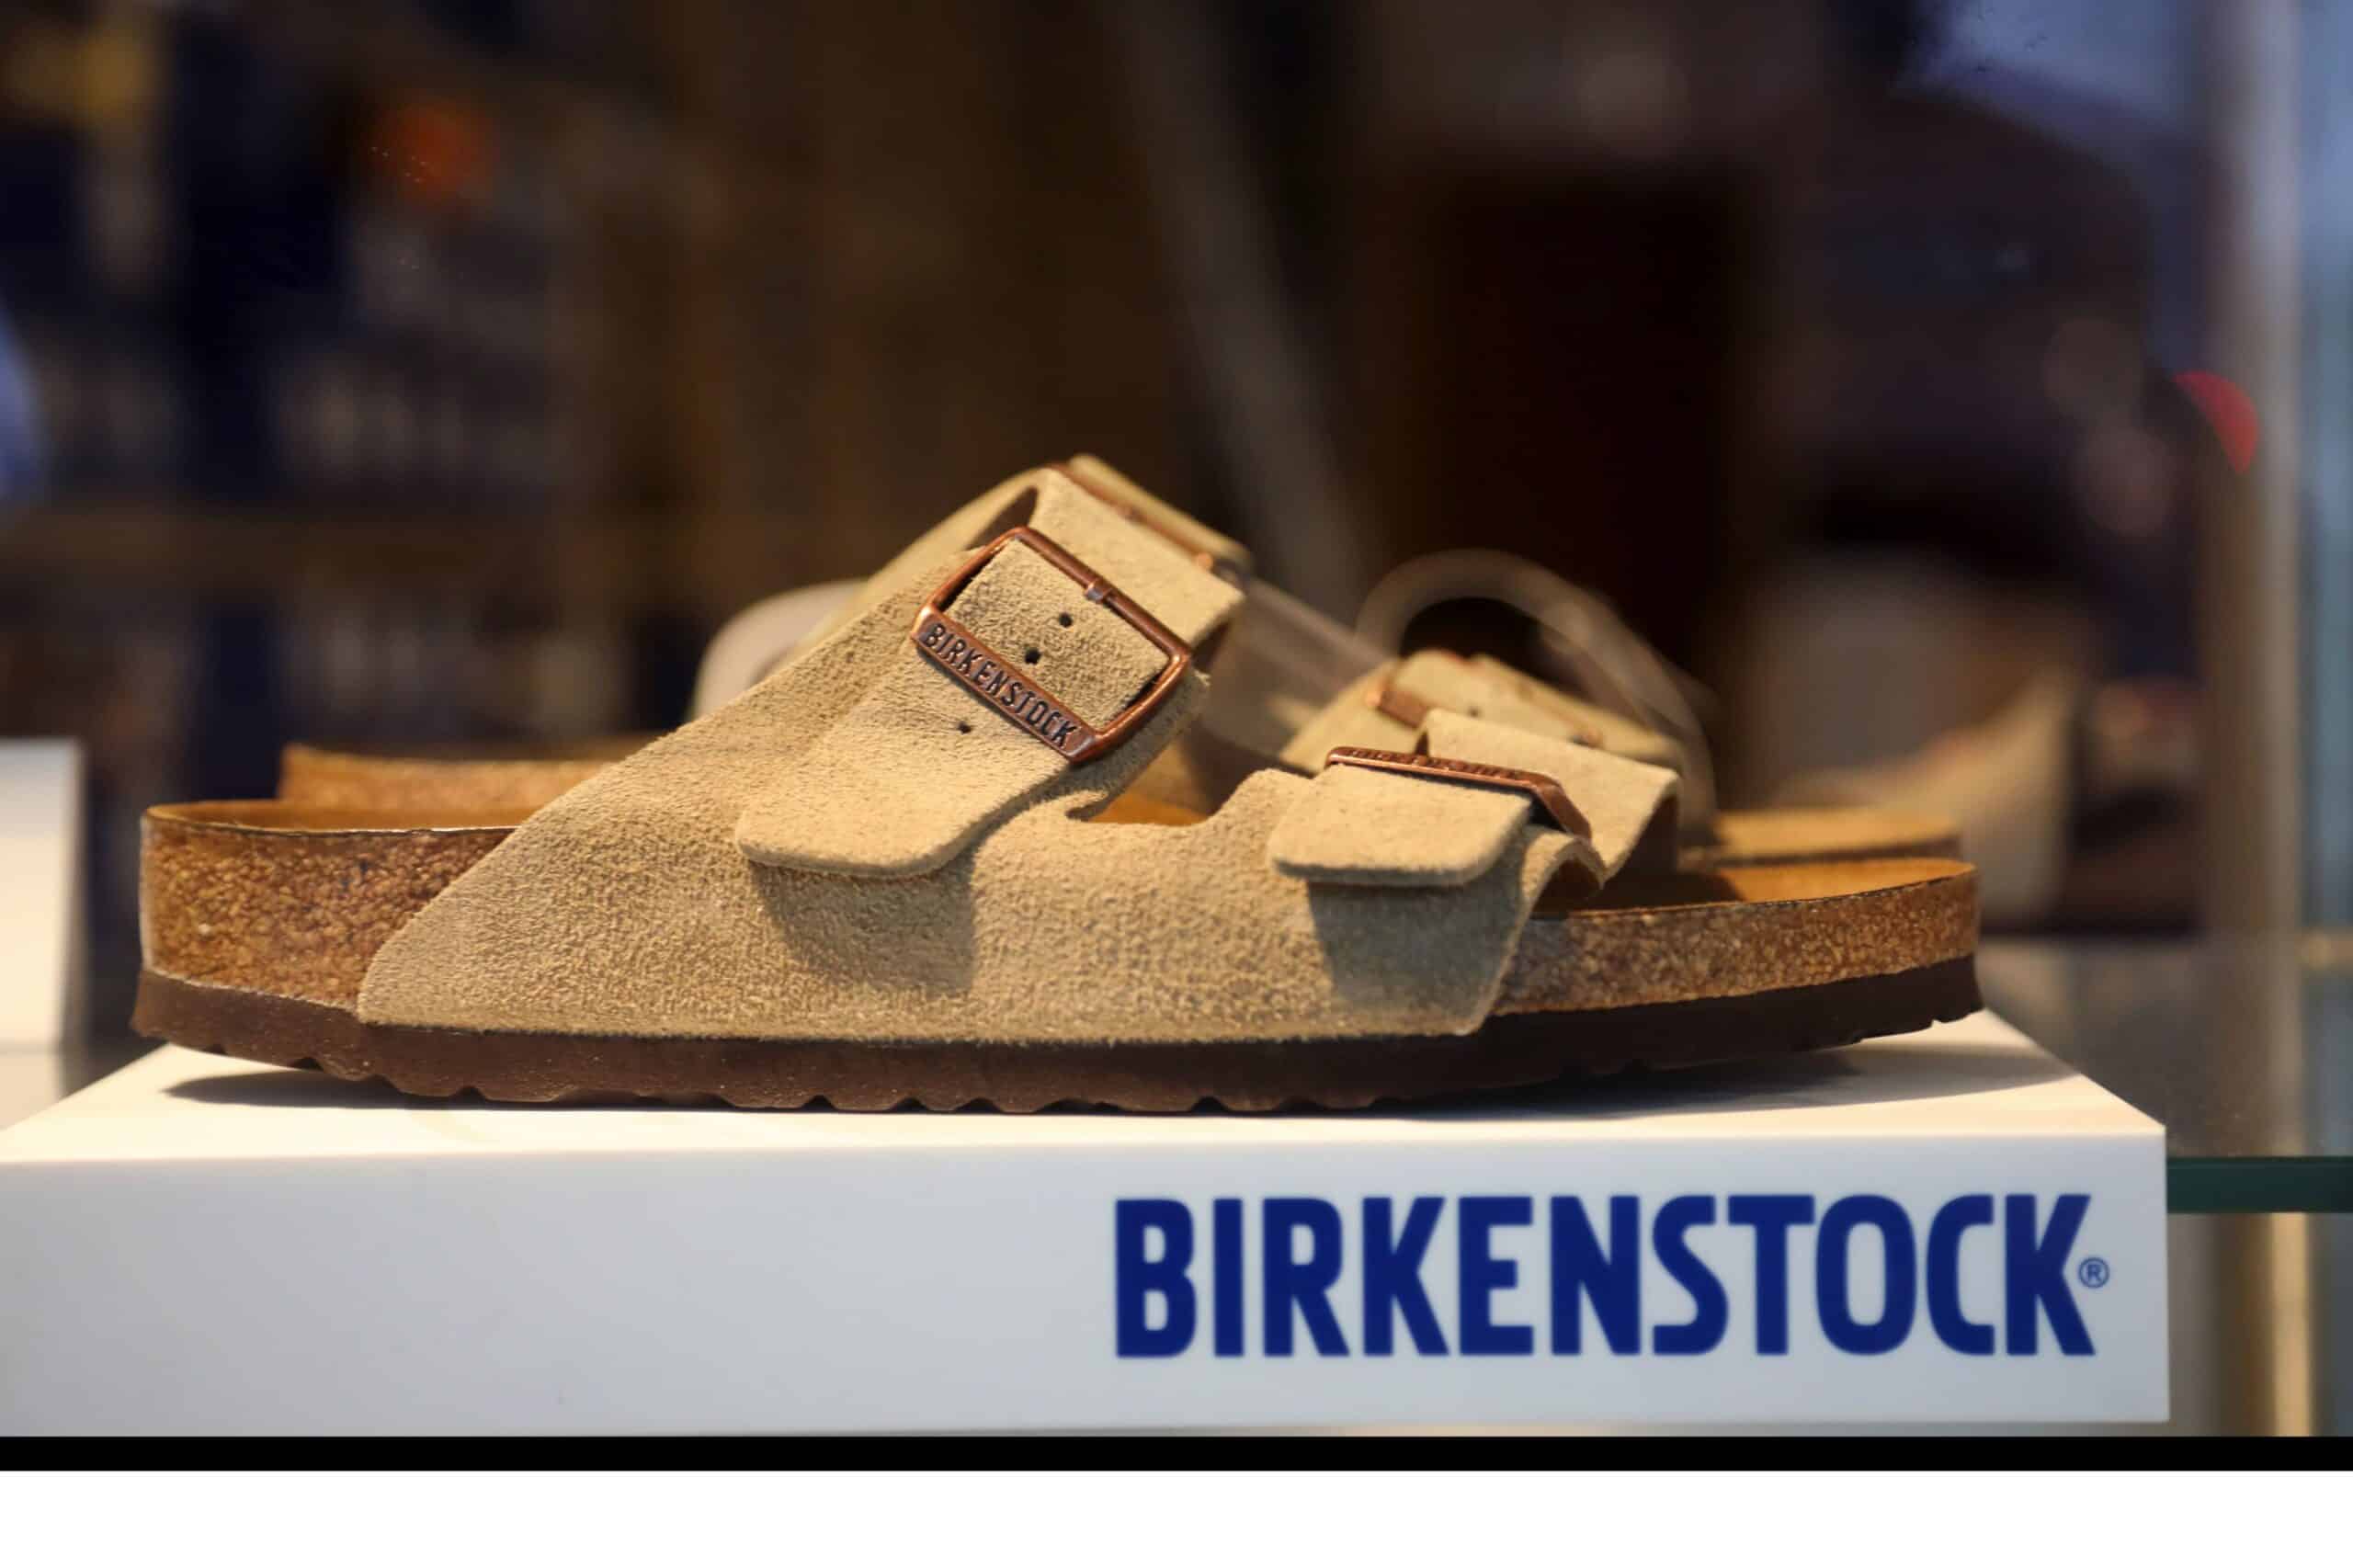 Birkenstock worth billions after IPO